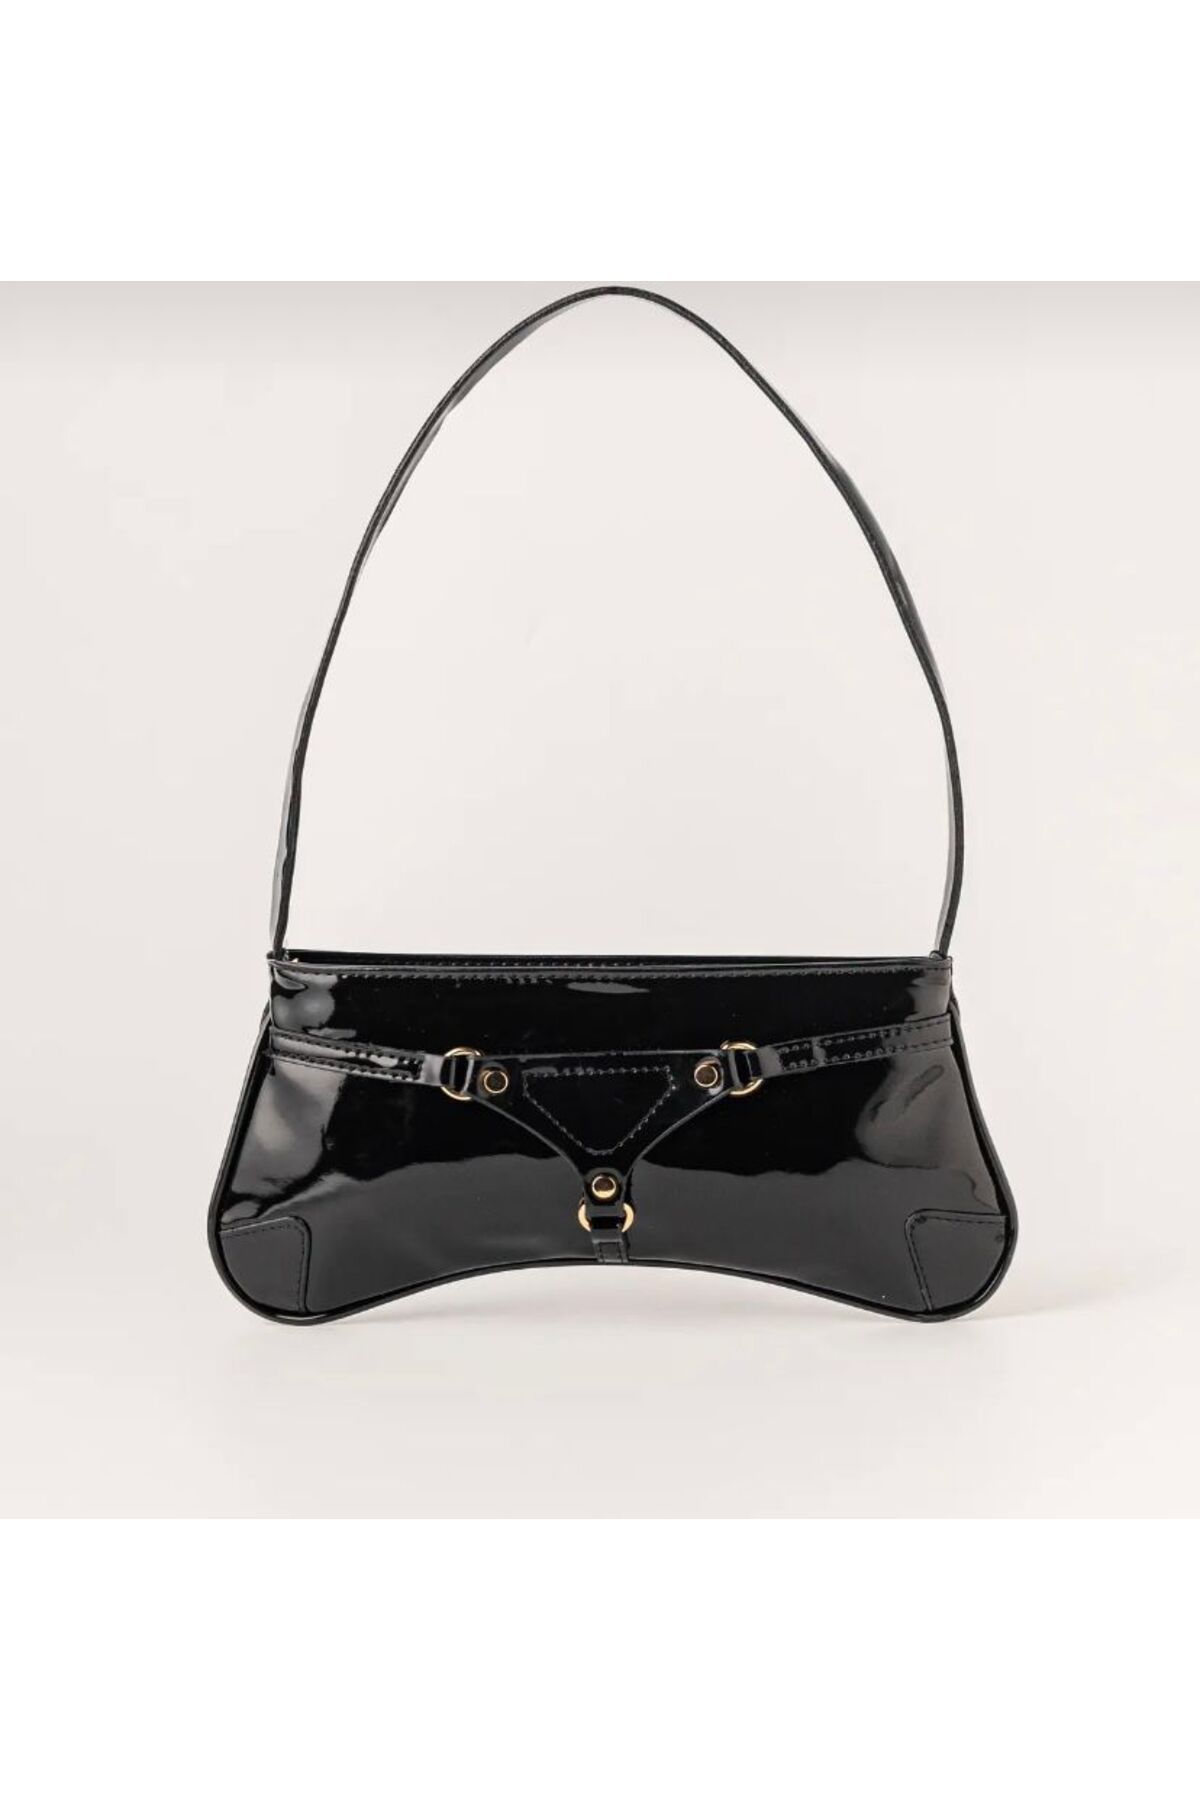 Mercan Stores Kadın Siyah Rugan Pinterest Model Baget Çanta